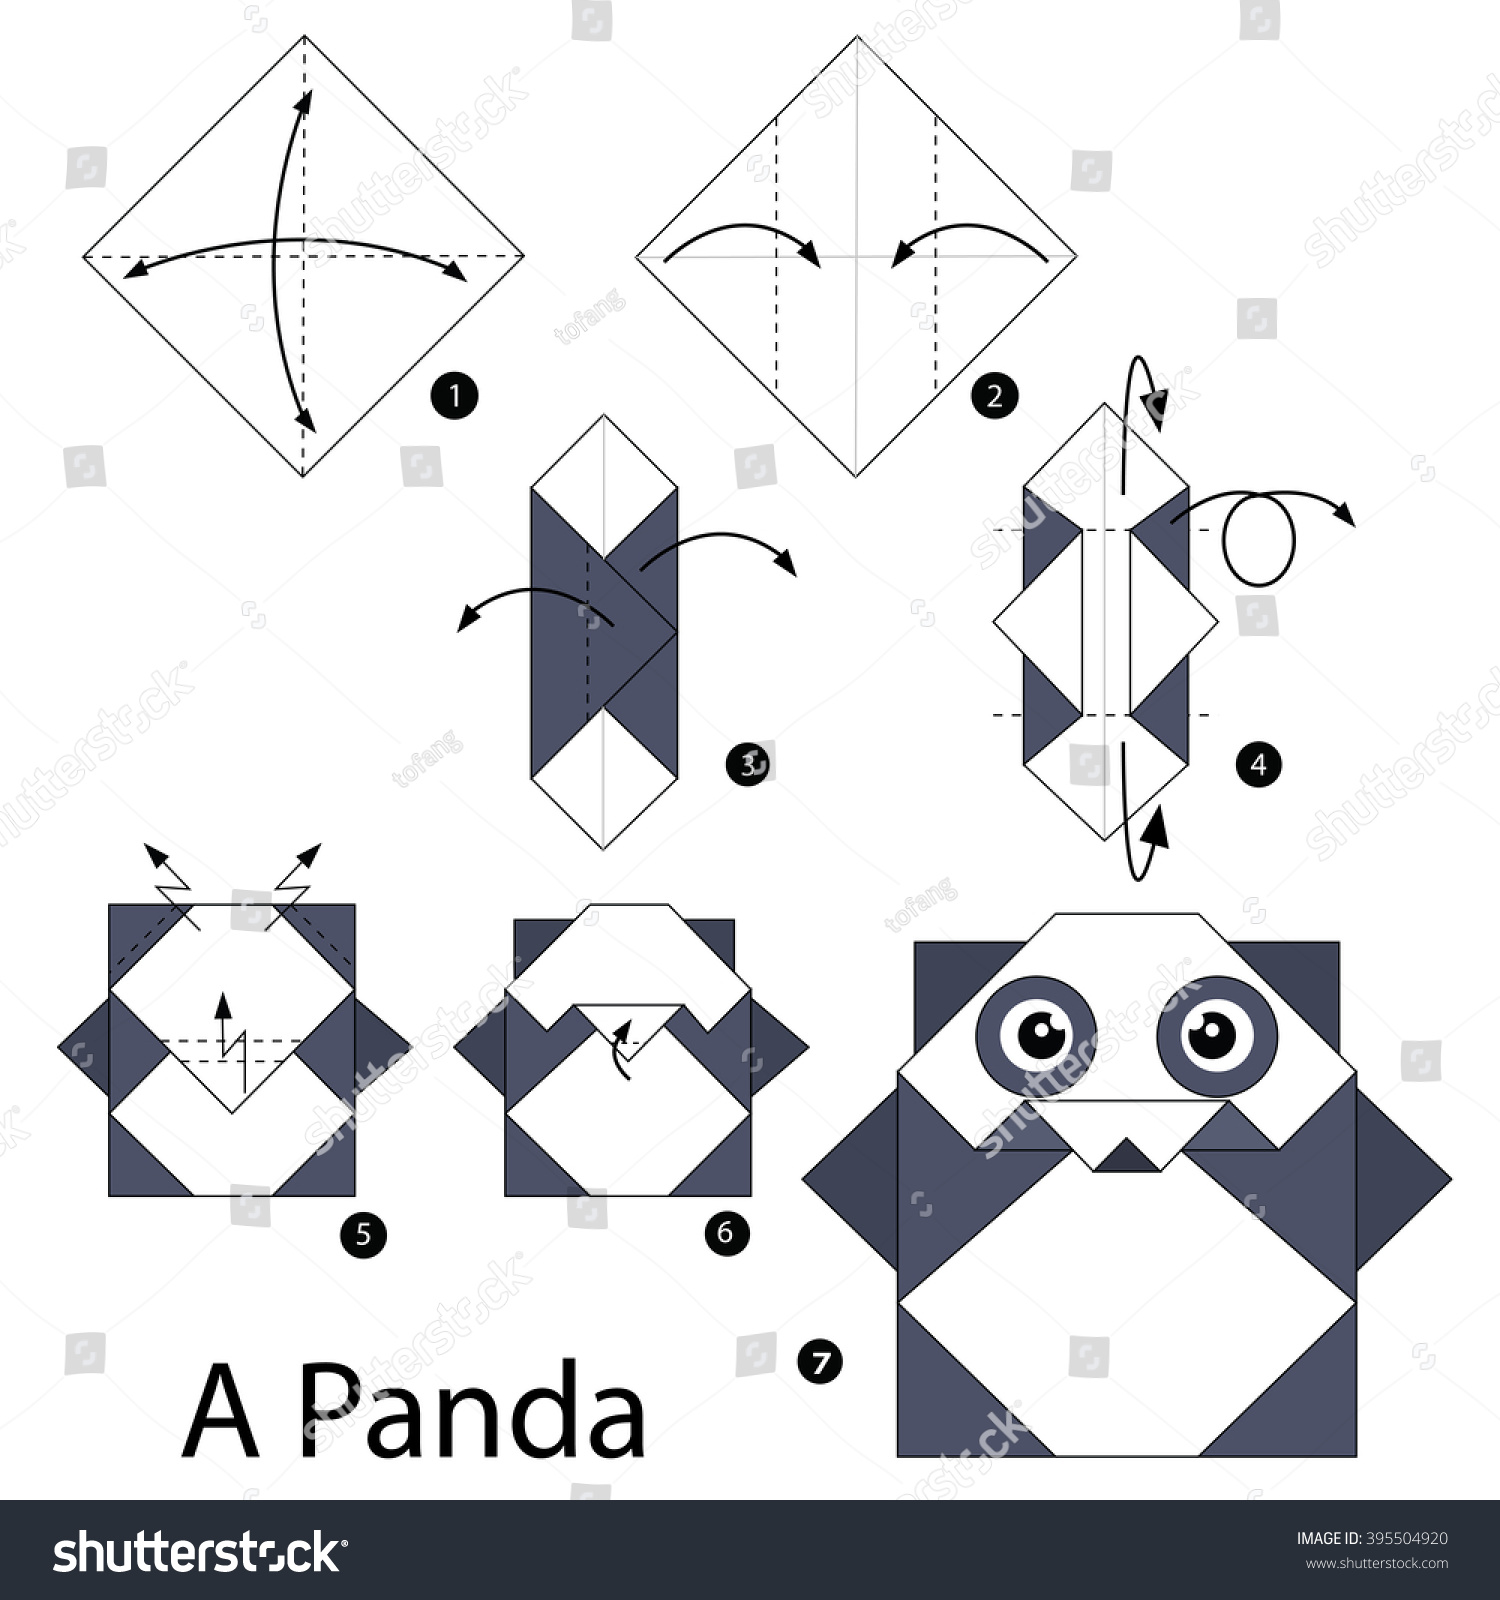 Oriland Origami Panda Family Origami Panda Easy